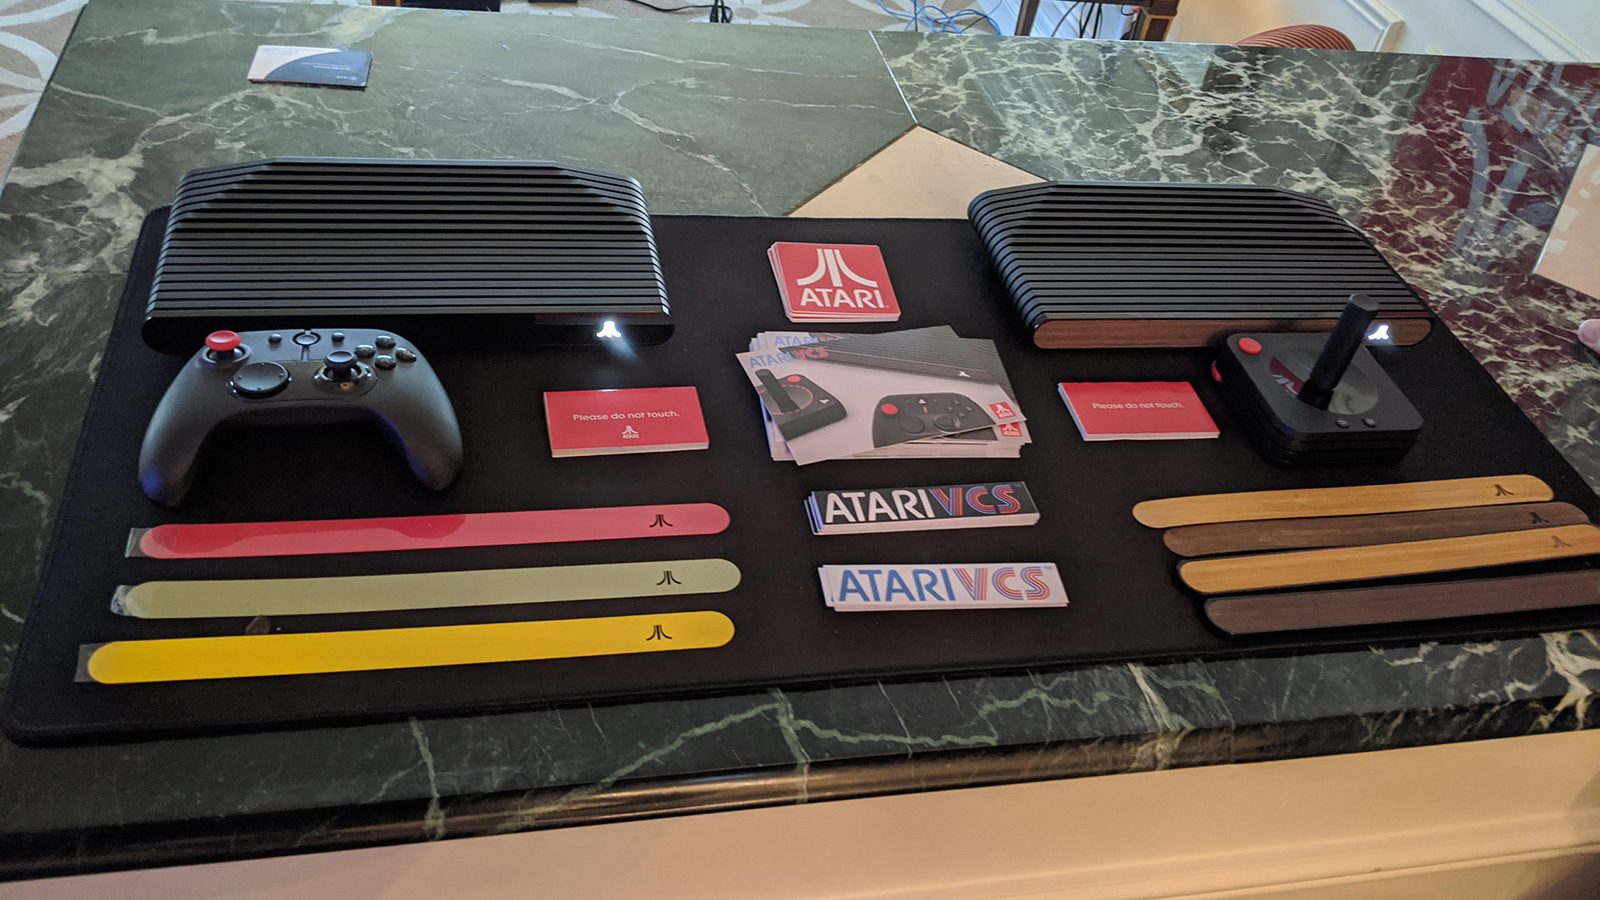  Atari Inc. nevéhez fűződik az ed Atari Games Inc.